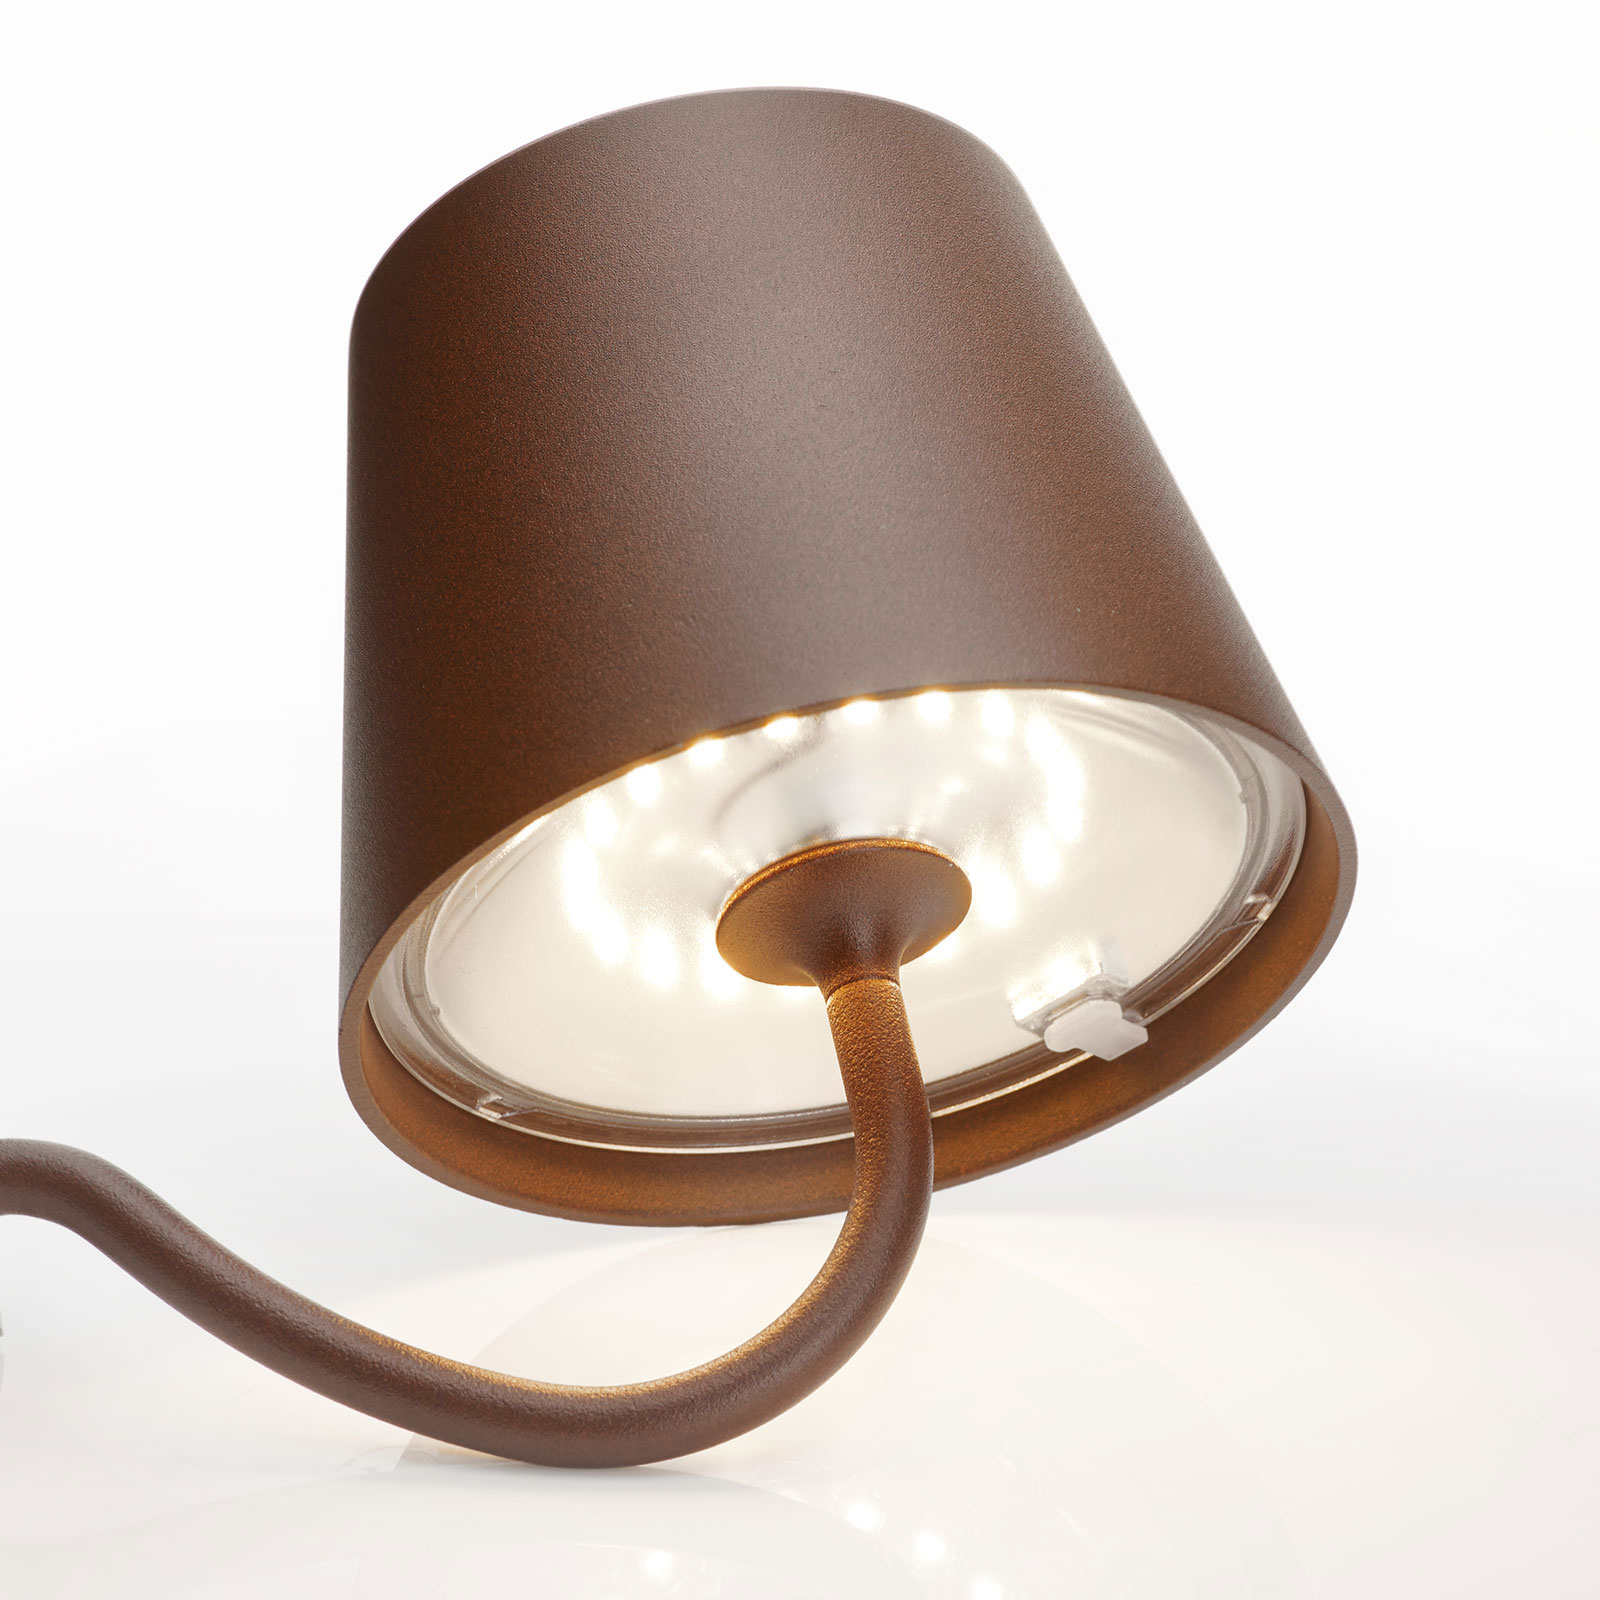 eindpunt pil baai LED wandlamp Poldina dimbaar, accu en USB-poort | Lampen24.nl